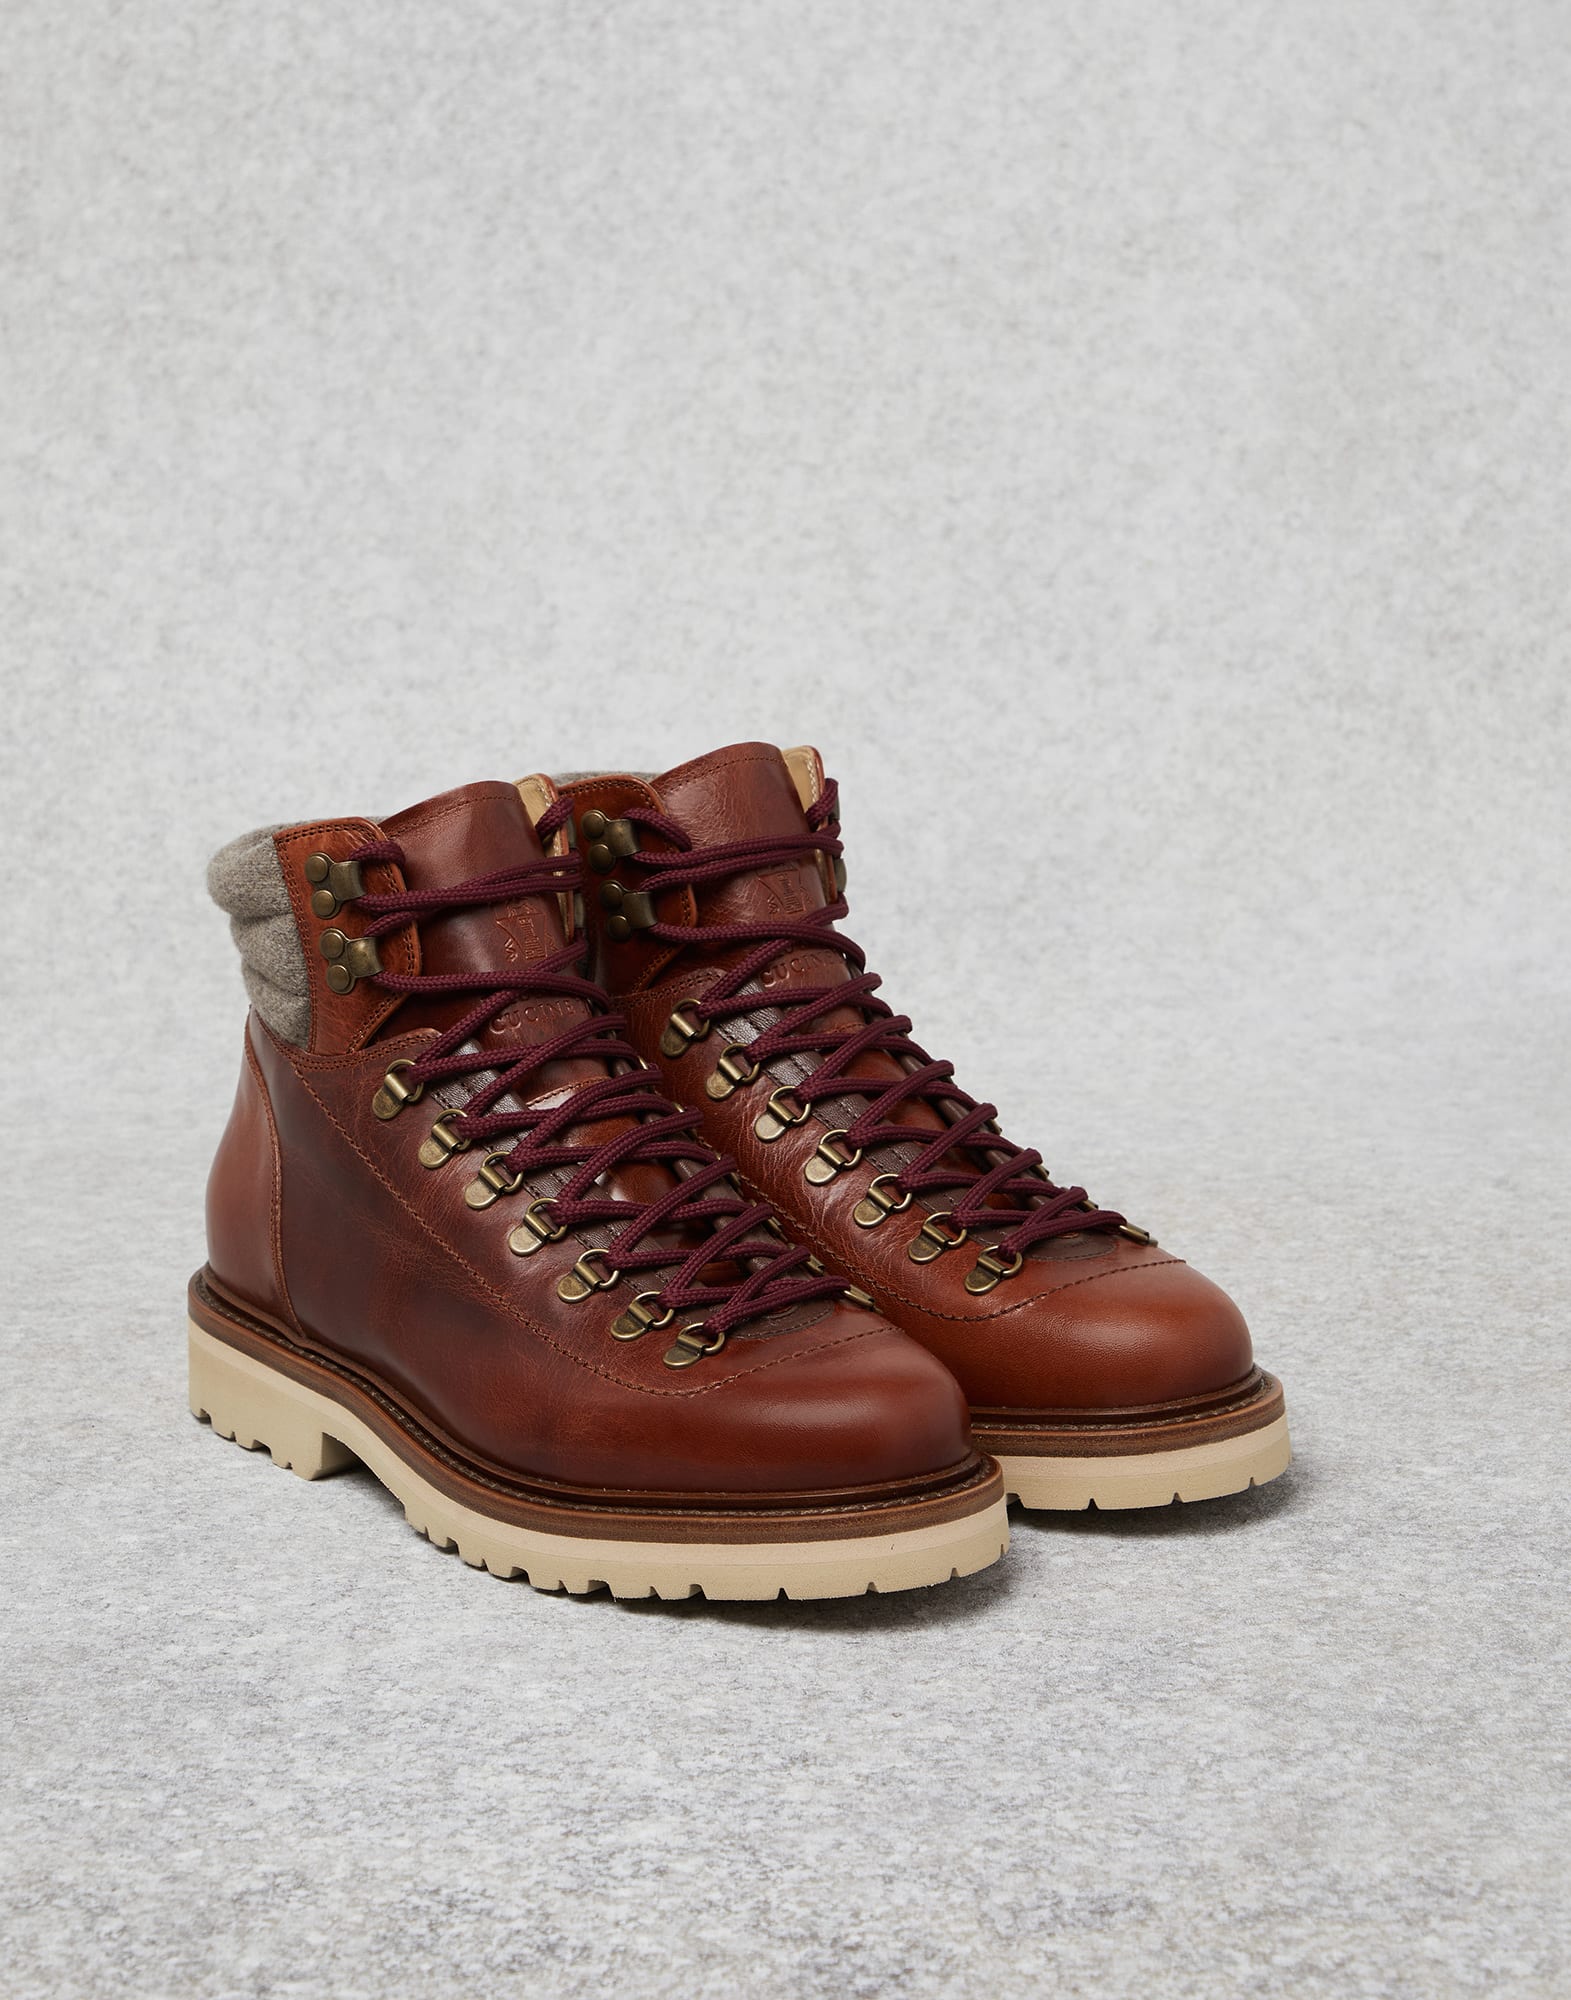 Mountain-style boot